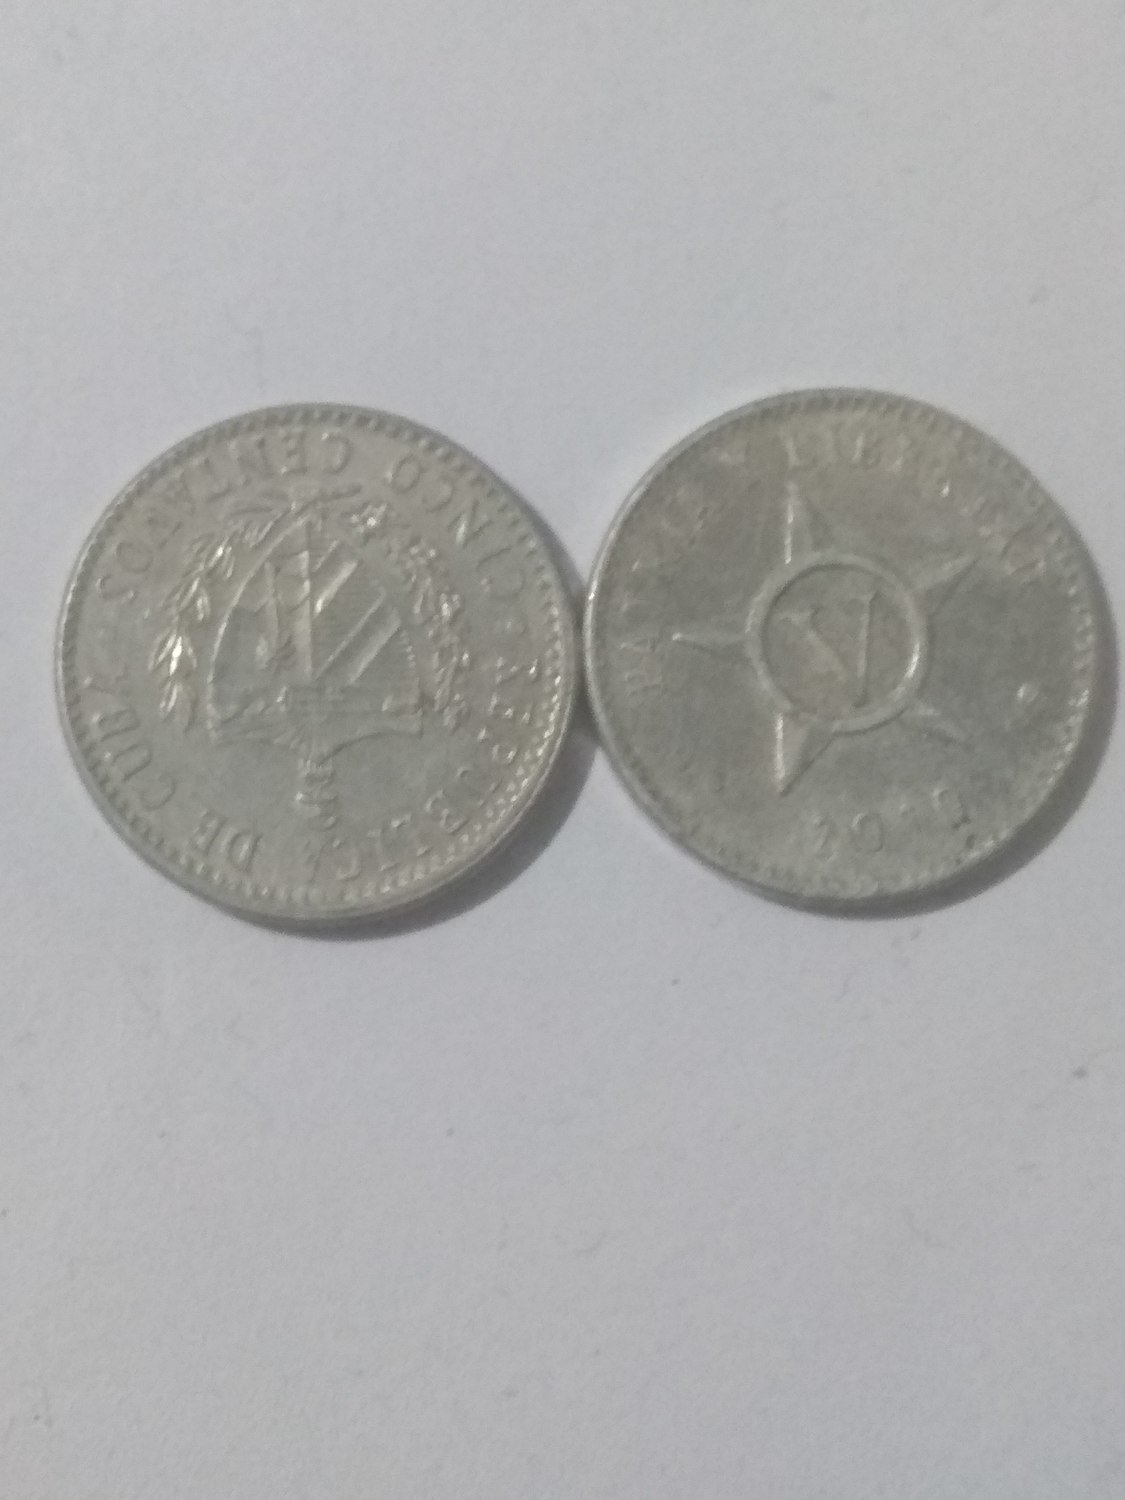 Cuba. 2010. 5 centavos CUP. Star. Type: 1915. Aluminium. 1.500 g., KM#34. VF